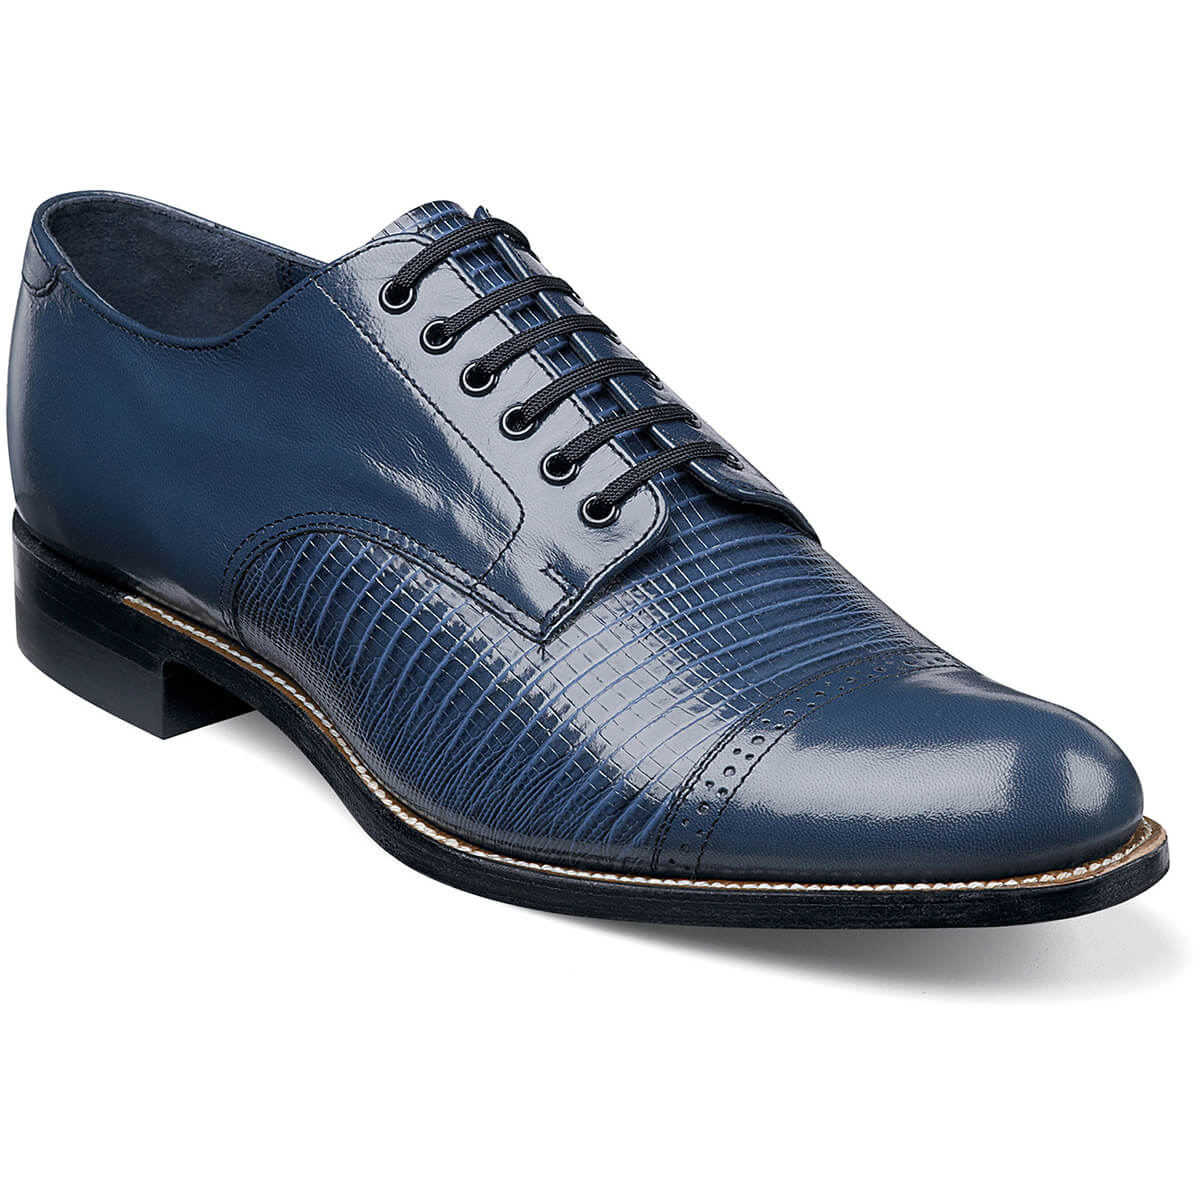 Men's Dress Shoes | Blue Lizard Cap Toe Oxford | Stacy Adams Madison